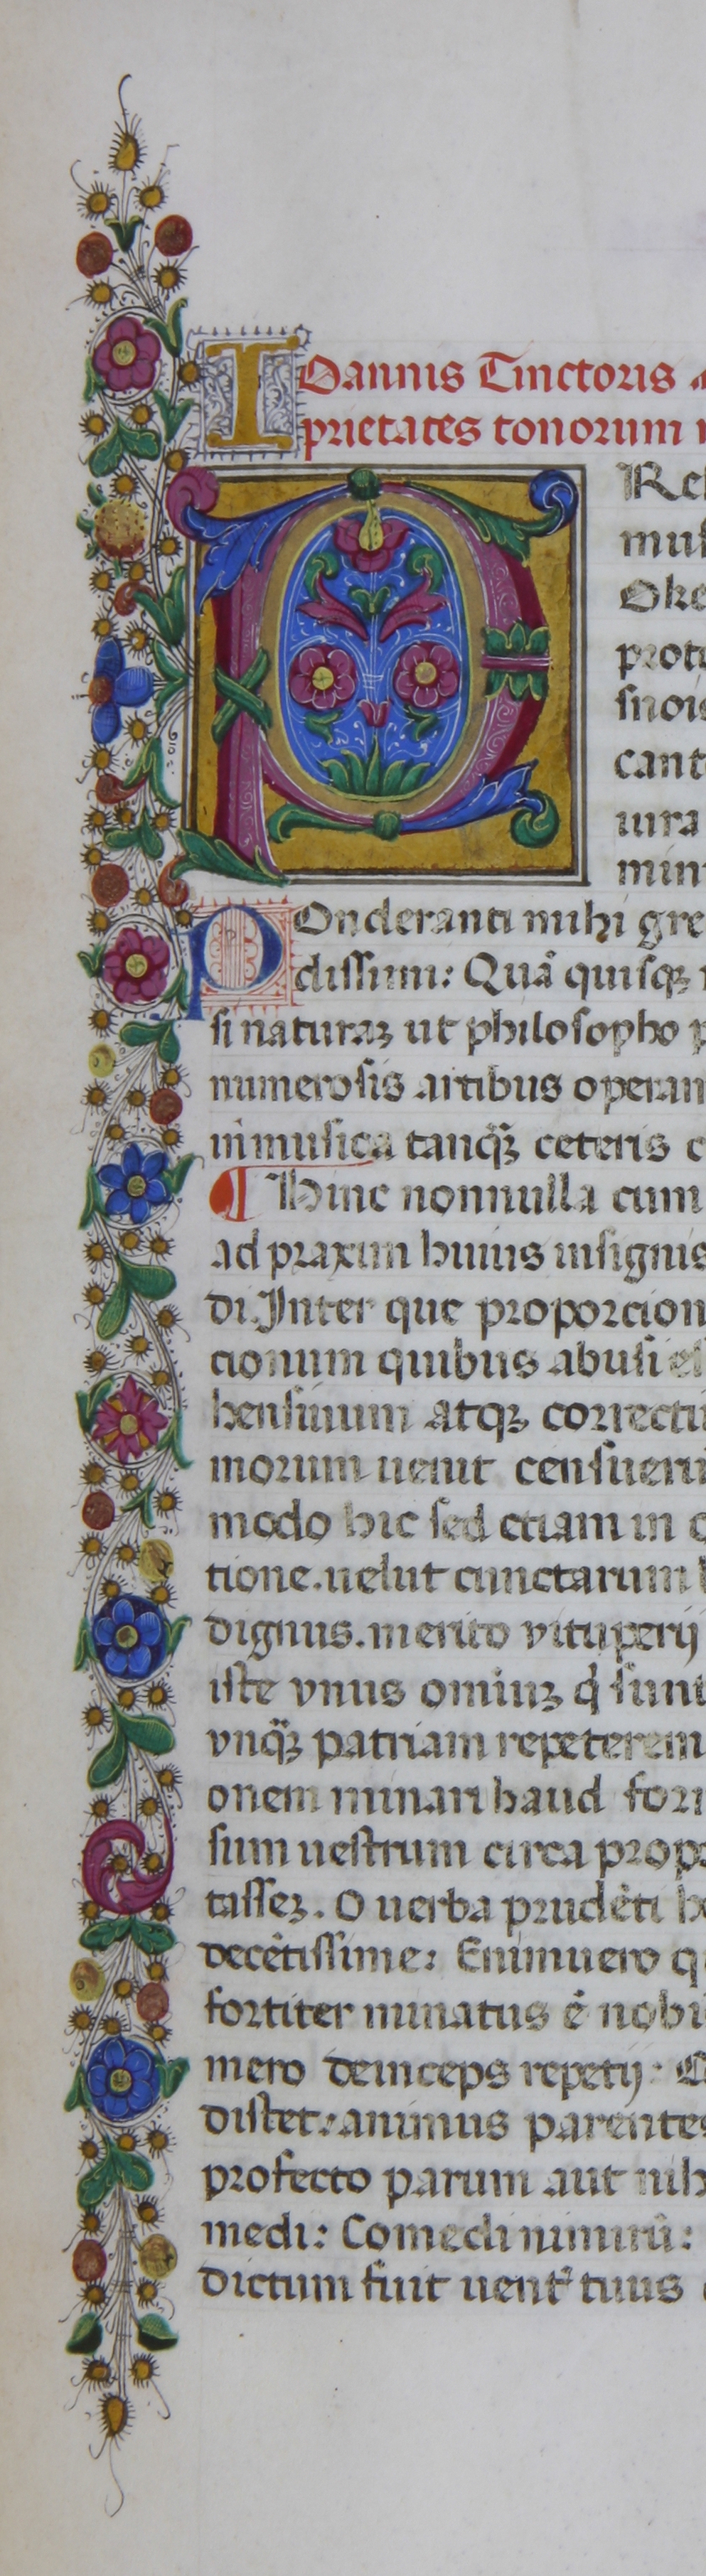 Universitat de València, Biblioteca Històrica, MS 835 [olim 844], fol. 16r (detail). Source: Universitat de València, Biblioteca Històrica.